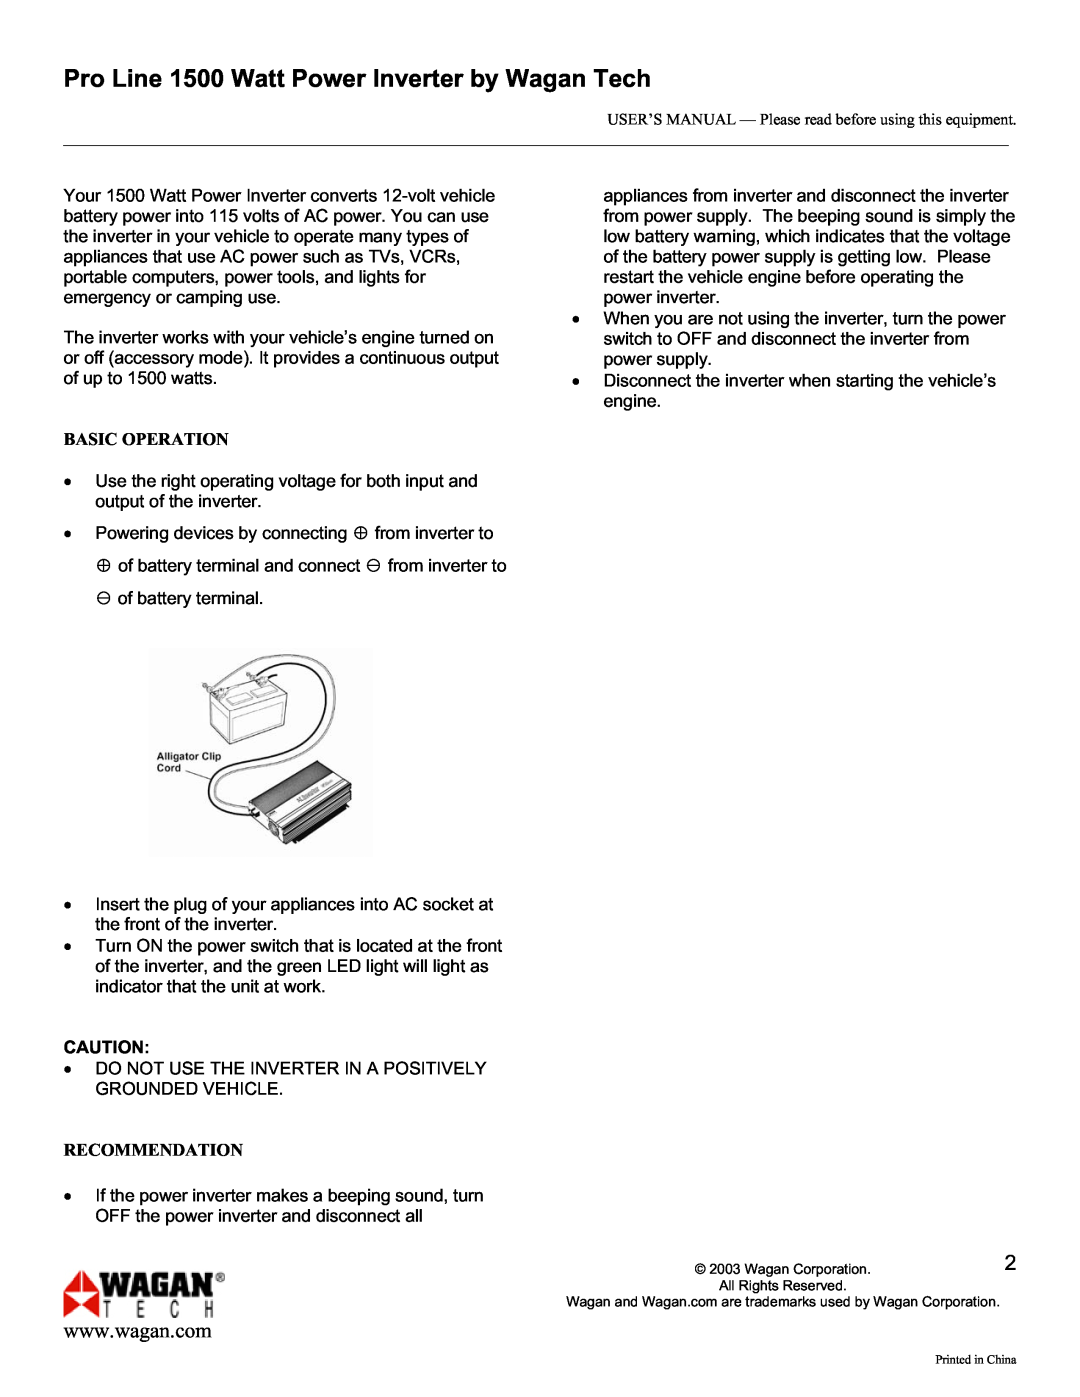 Wagan 9751 user manual Pro Line 1500 Watt Power Inverter by Wagan Tech, Basic Operation, Recommendation 